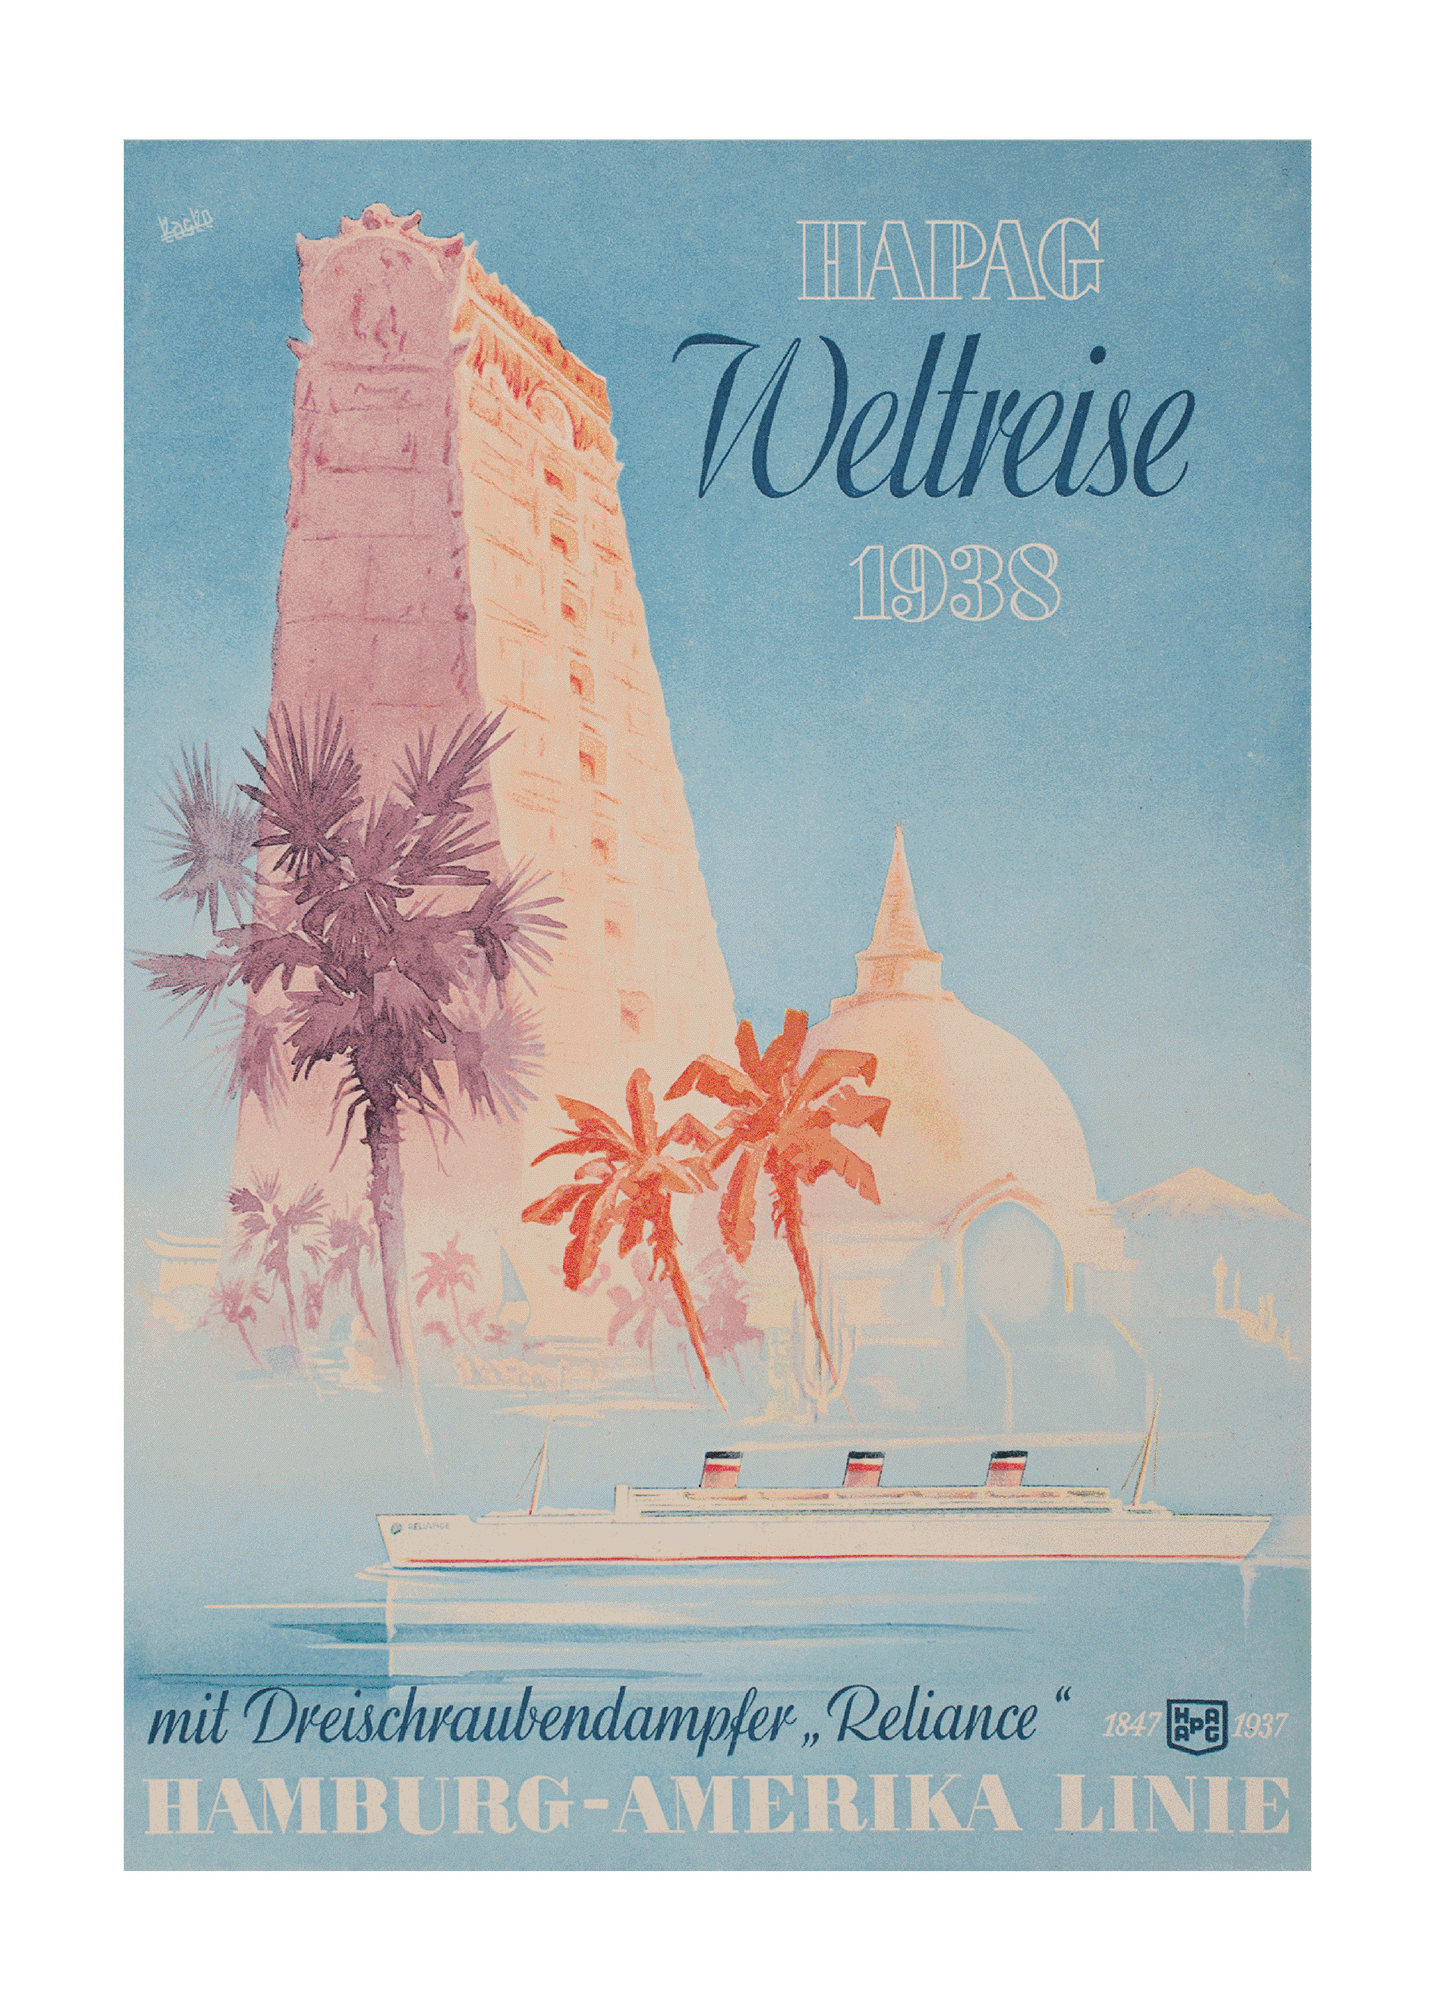 Ceylon Via The Hapag Winter Cruise, 1932.